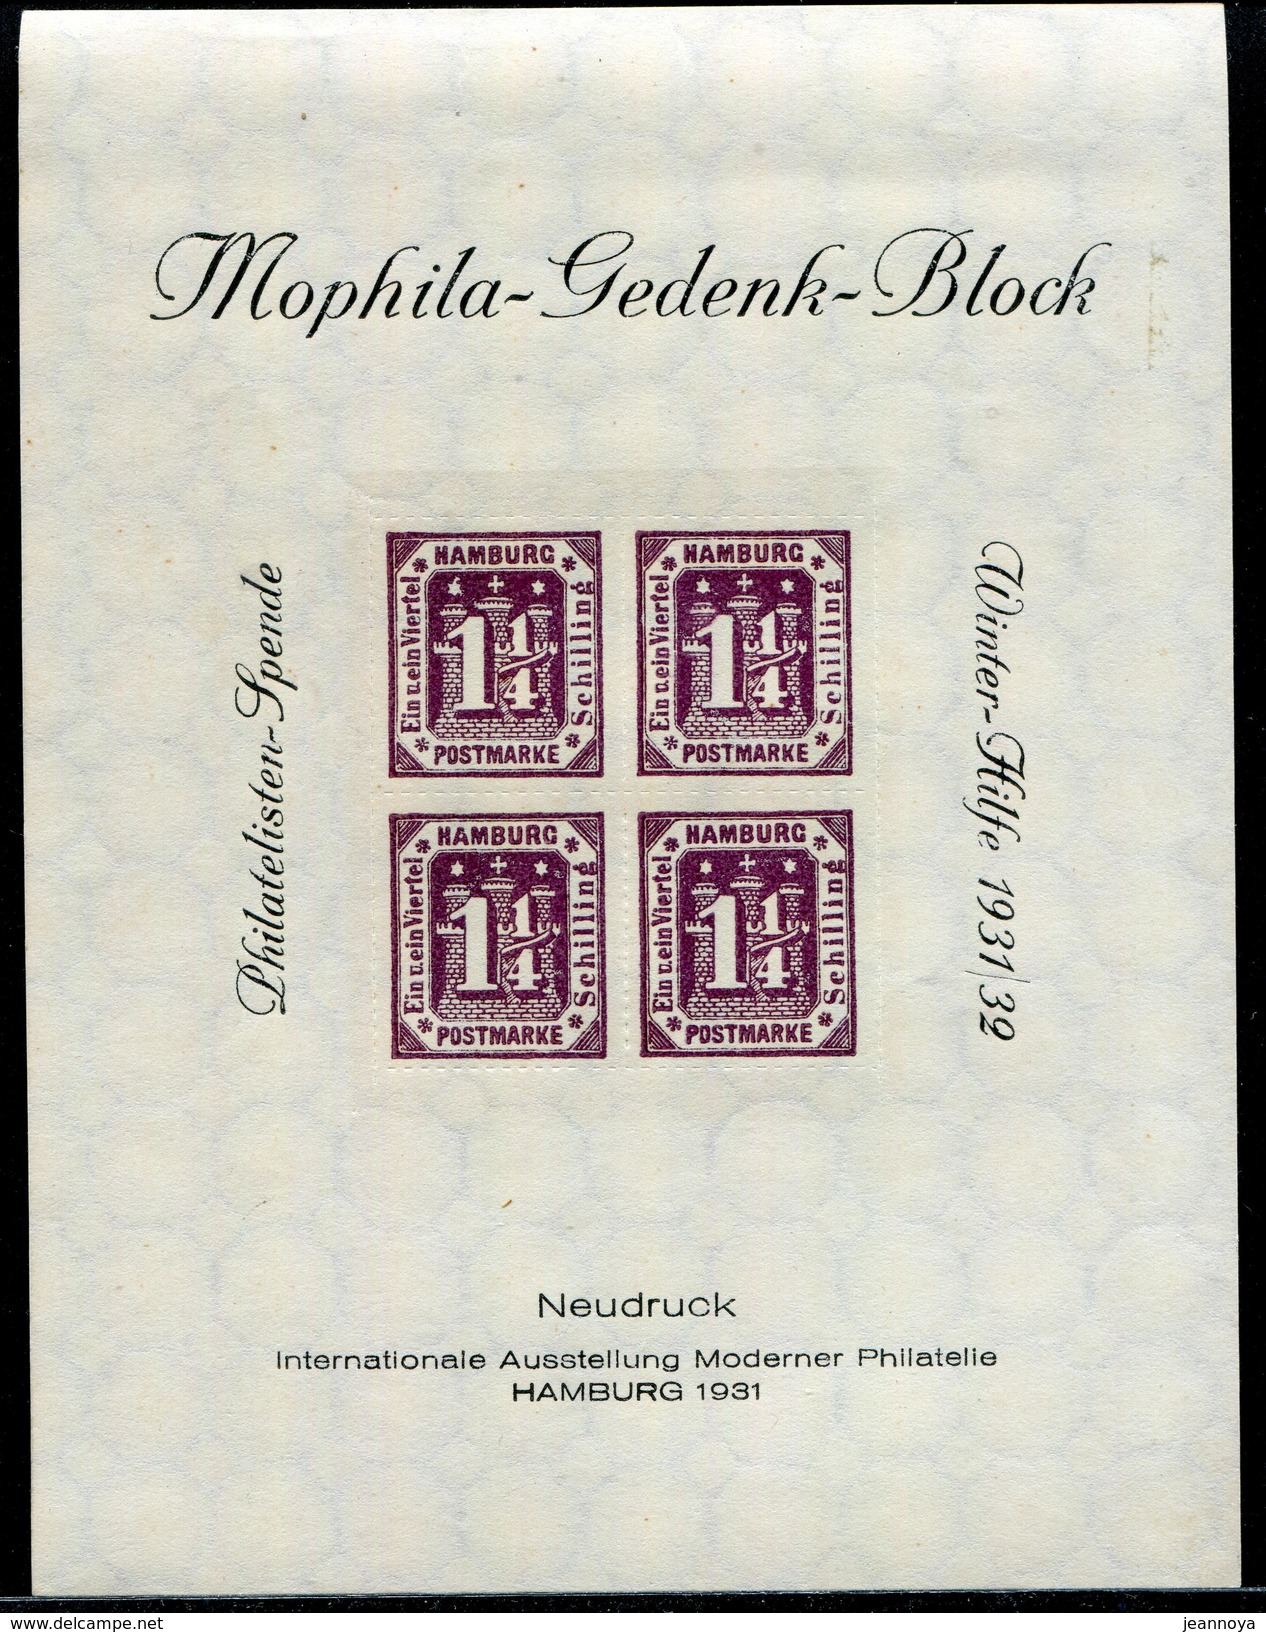 ALLEMAGNE - HAMBURG - SIMILI B.F. MOPHILA GEDENK BLOCK DE 1931 - ** - SUP - Hambourg